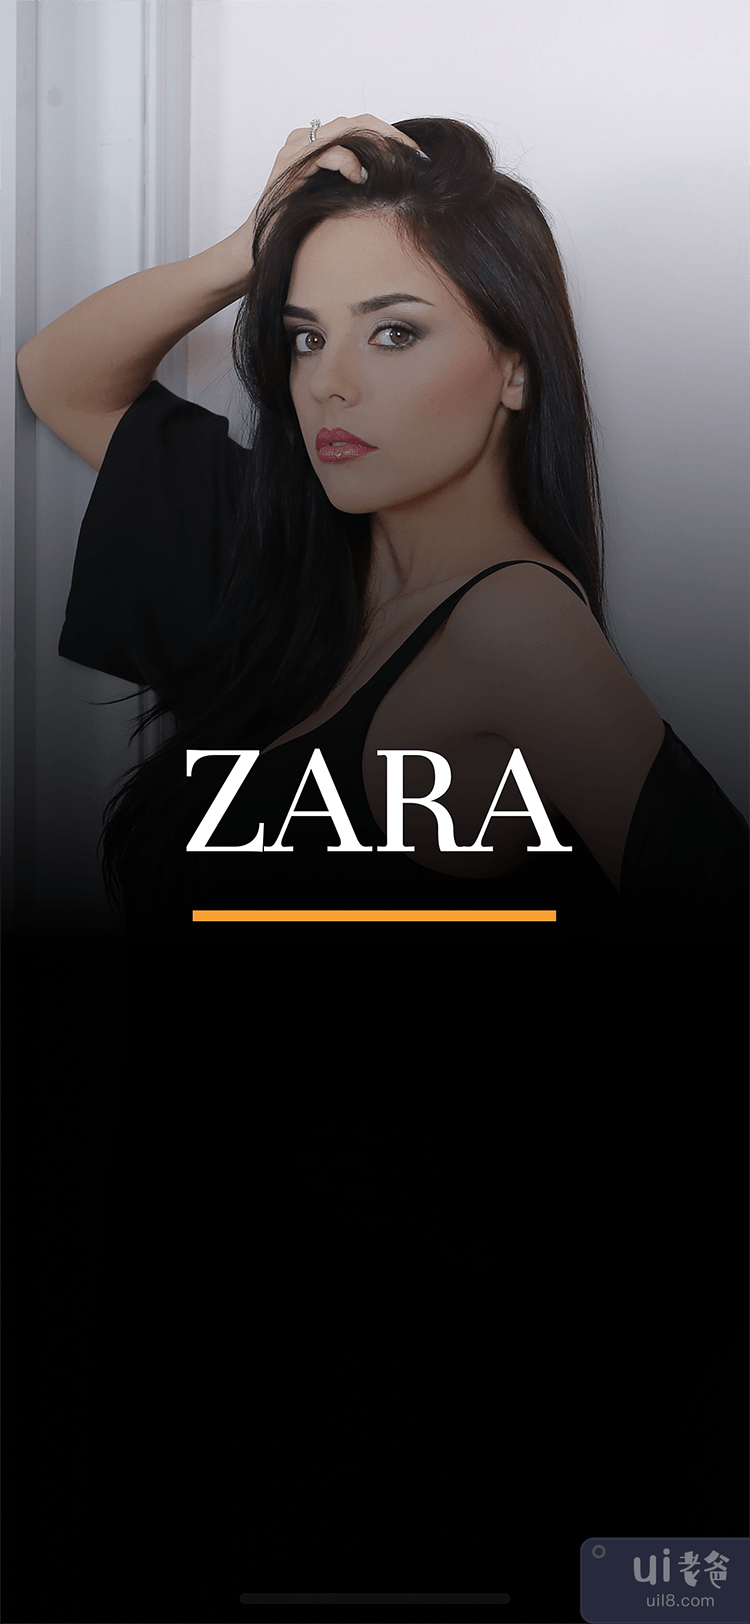 Zara 时尚 - iOS 应用(Zara fashion - iOS App)插图6